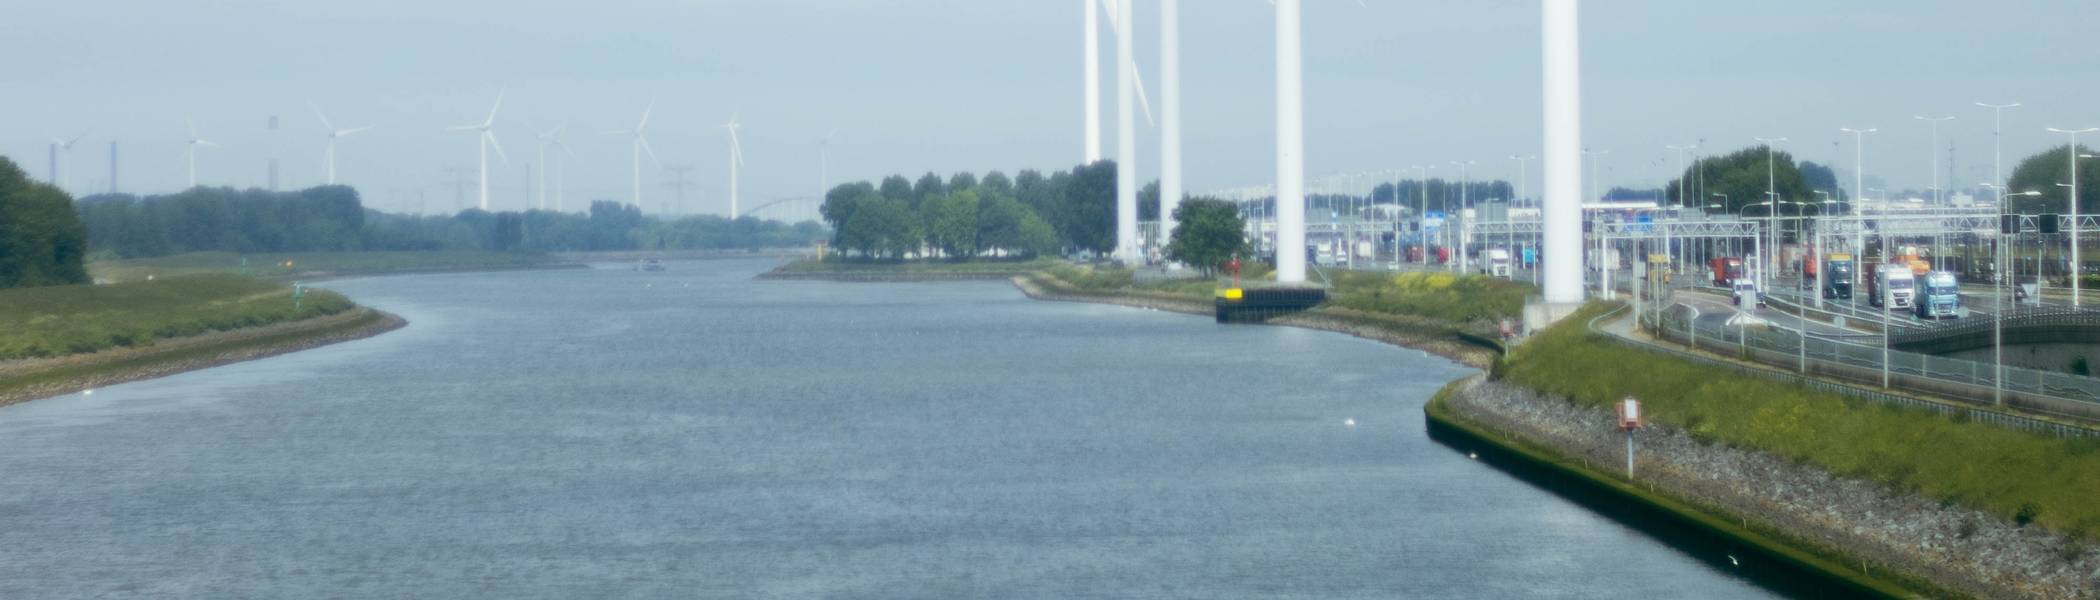 Windmolens langs rivier